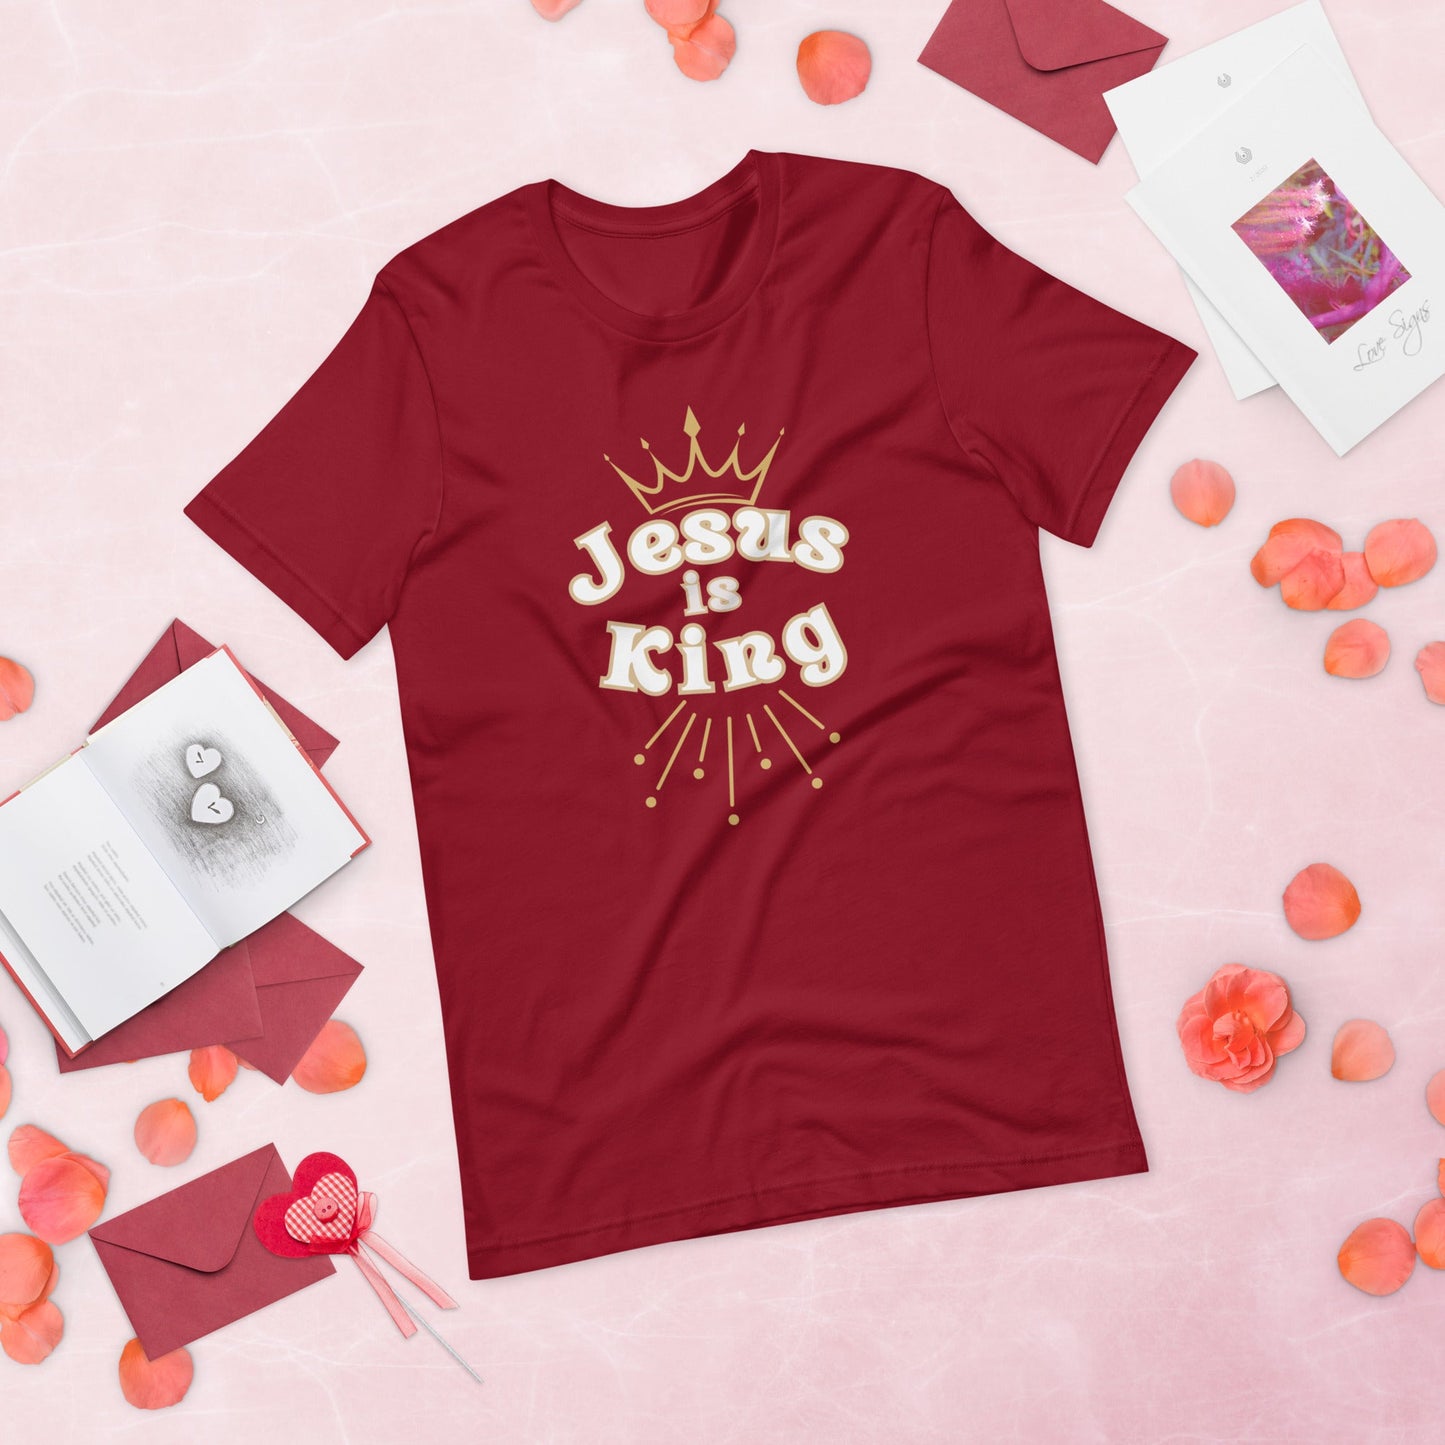 Unisex Jesus is King t-shirt - Bright Eye Creations